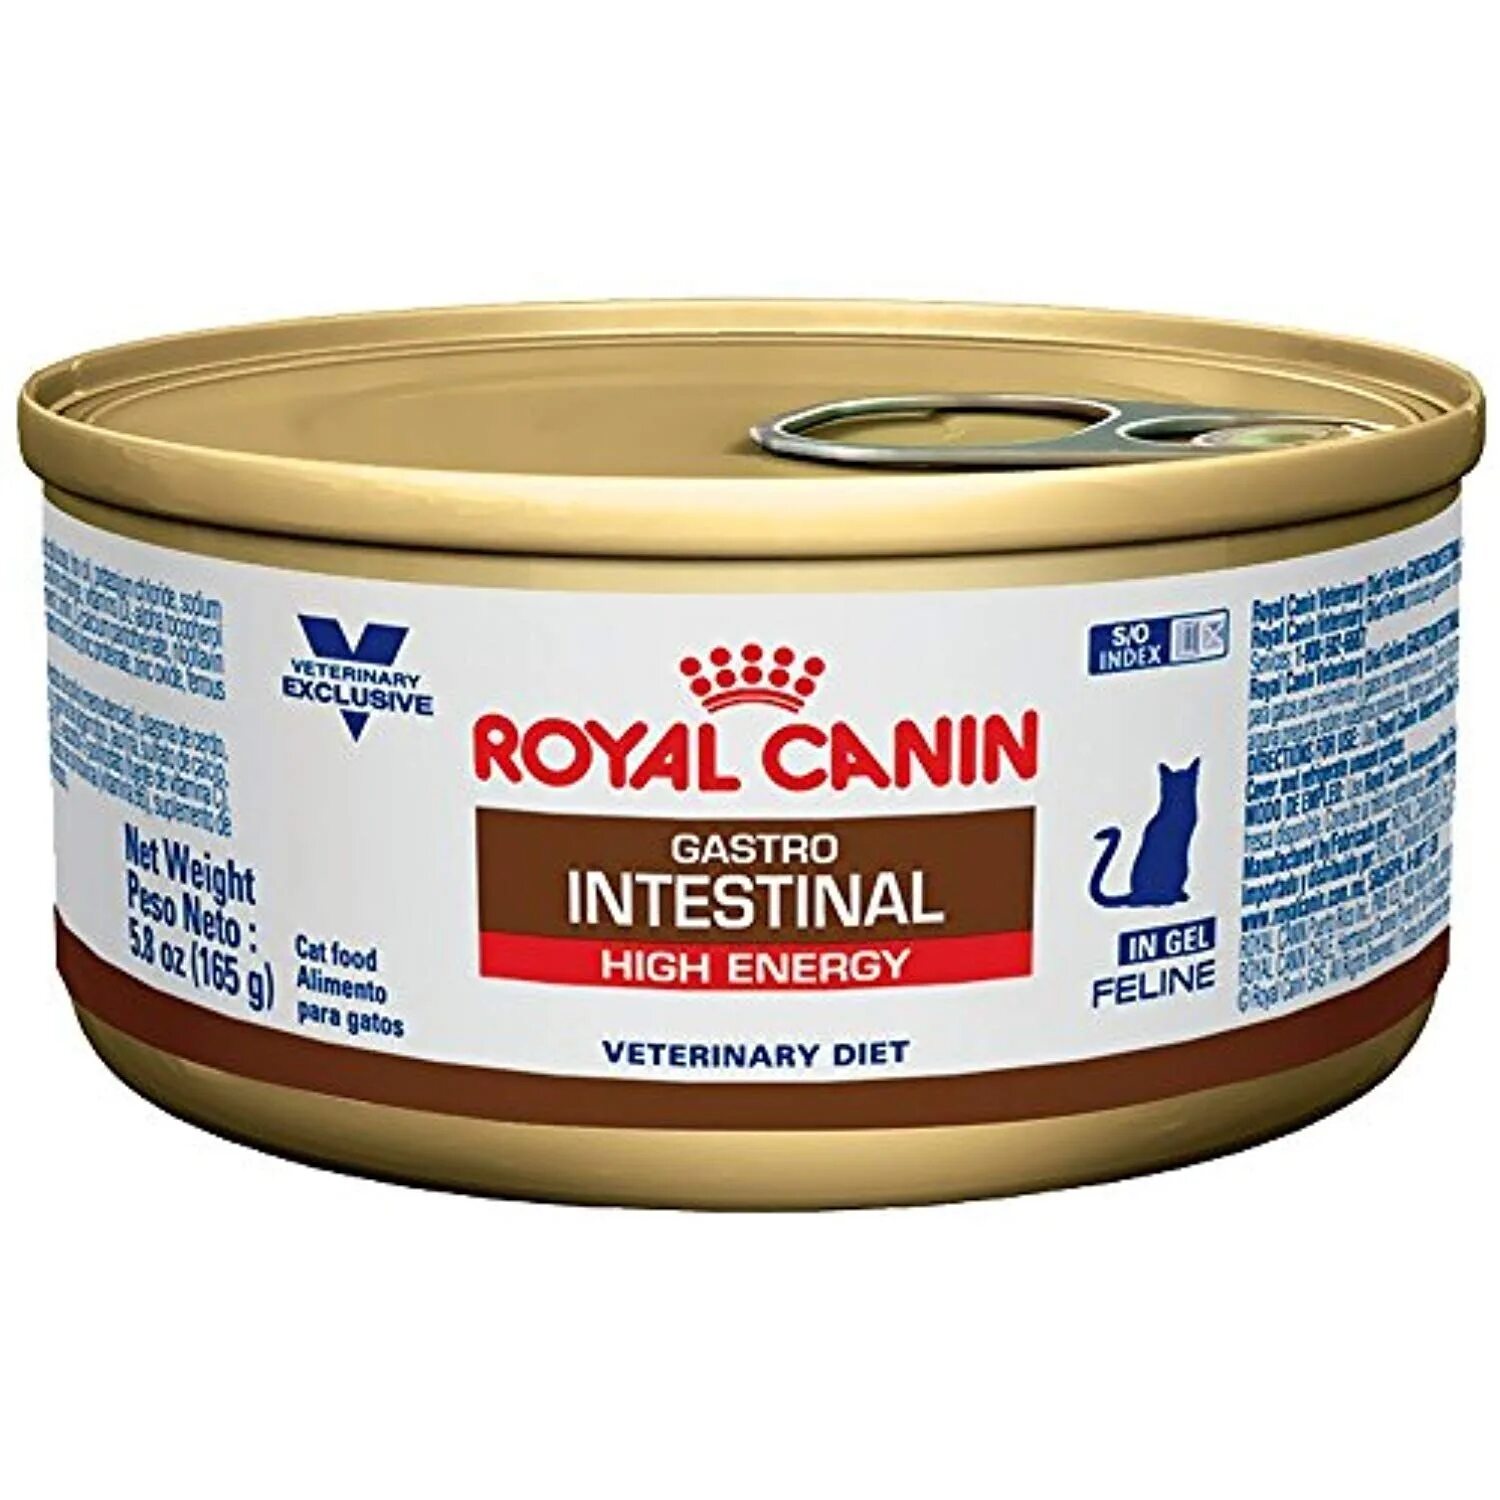 Royal canin gastrointestinal кошек. Паштет Роял Канин для кошек Gastrointestinal. Паштет гастро Интестинал для кошек. Роял Канин гастро Интестинал паштет. Роял Канин гастро паштет для кошек.